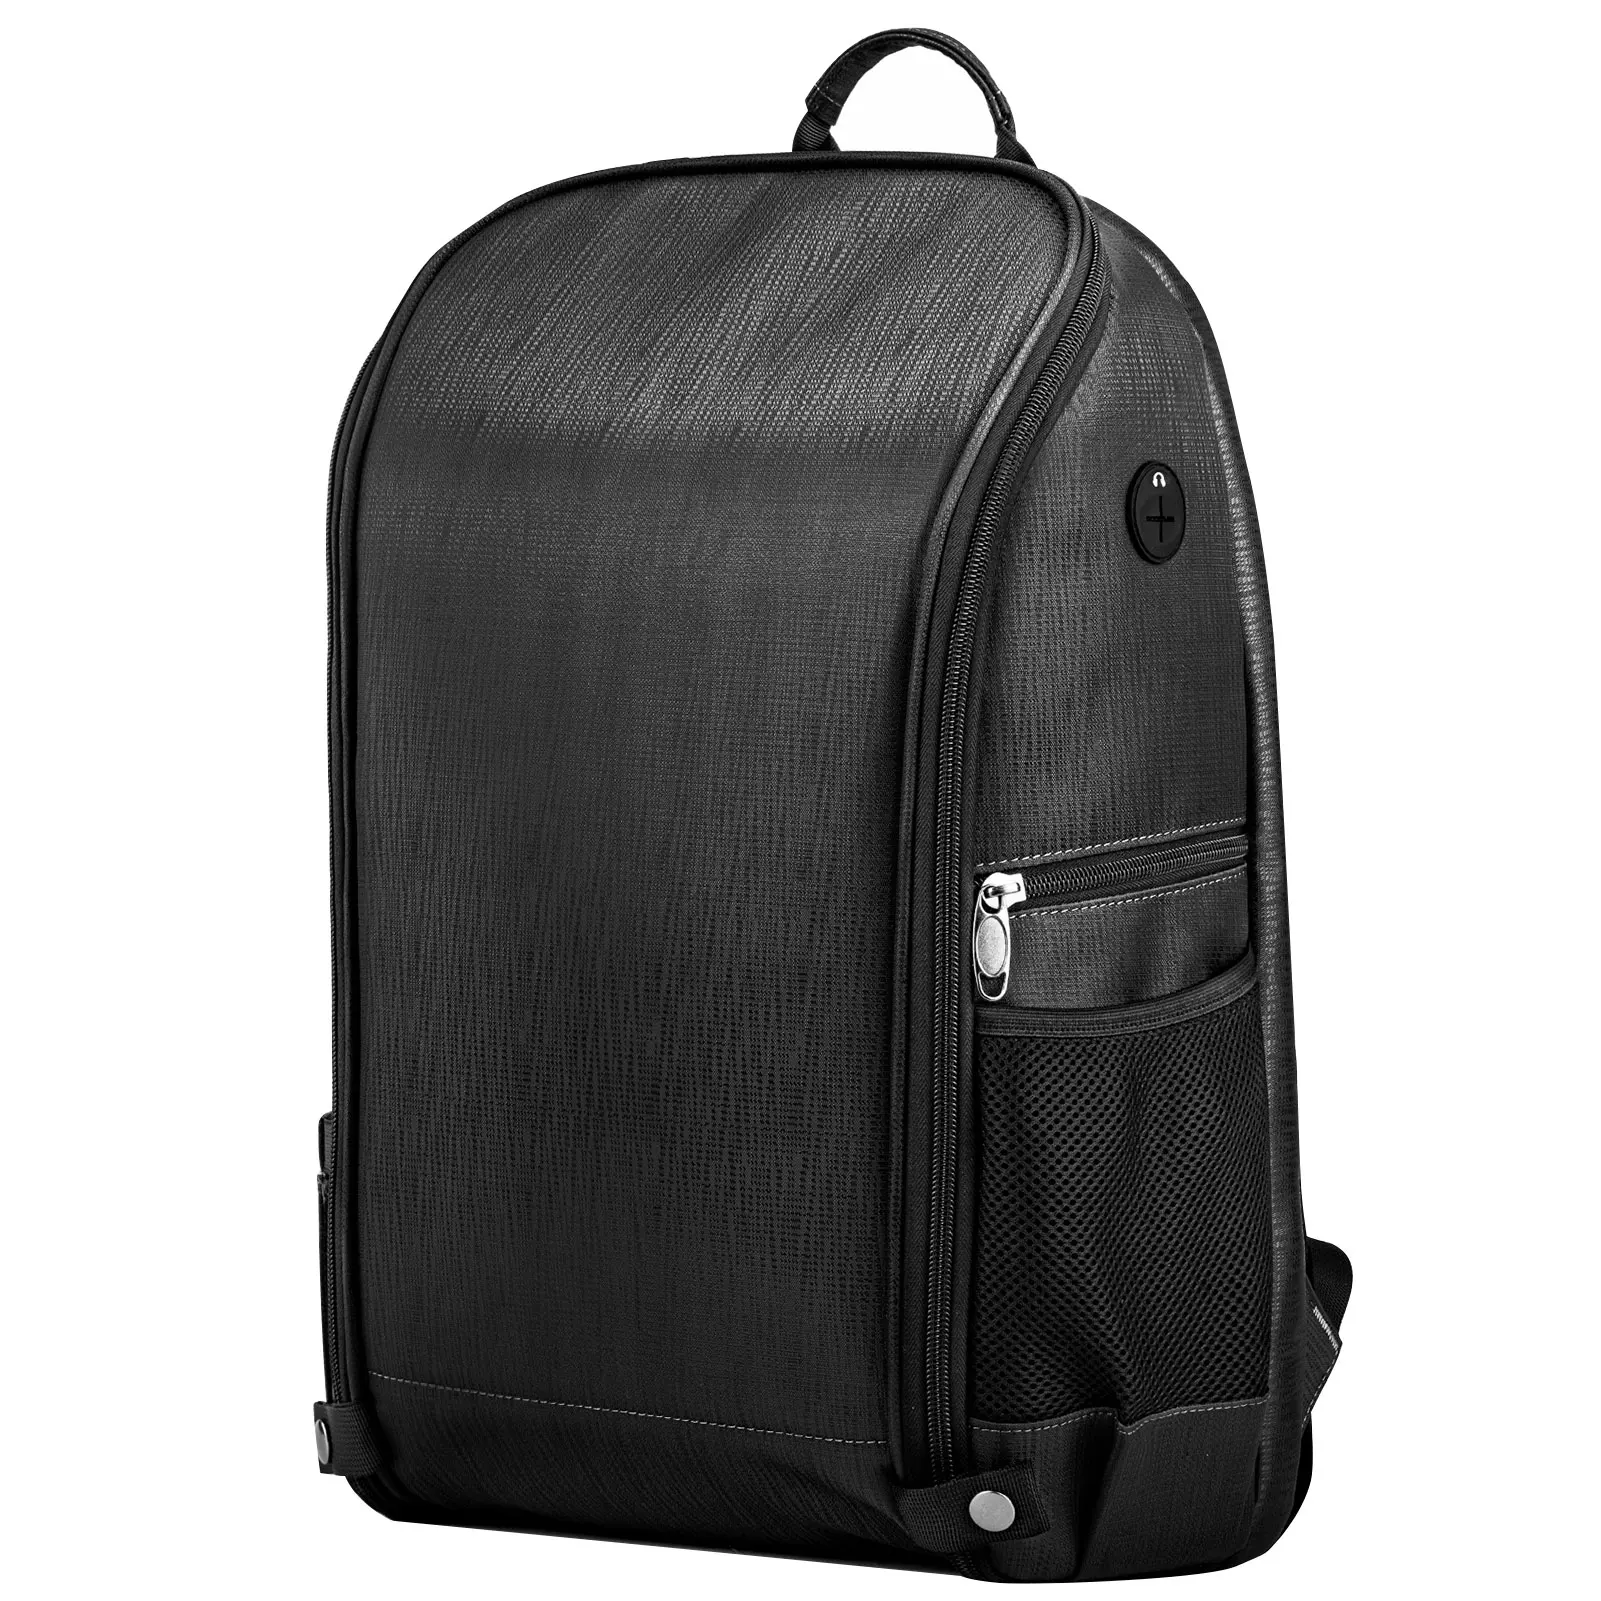 FPV Black backpack for DJI Avata